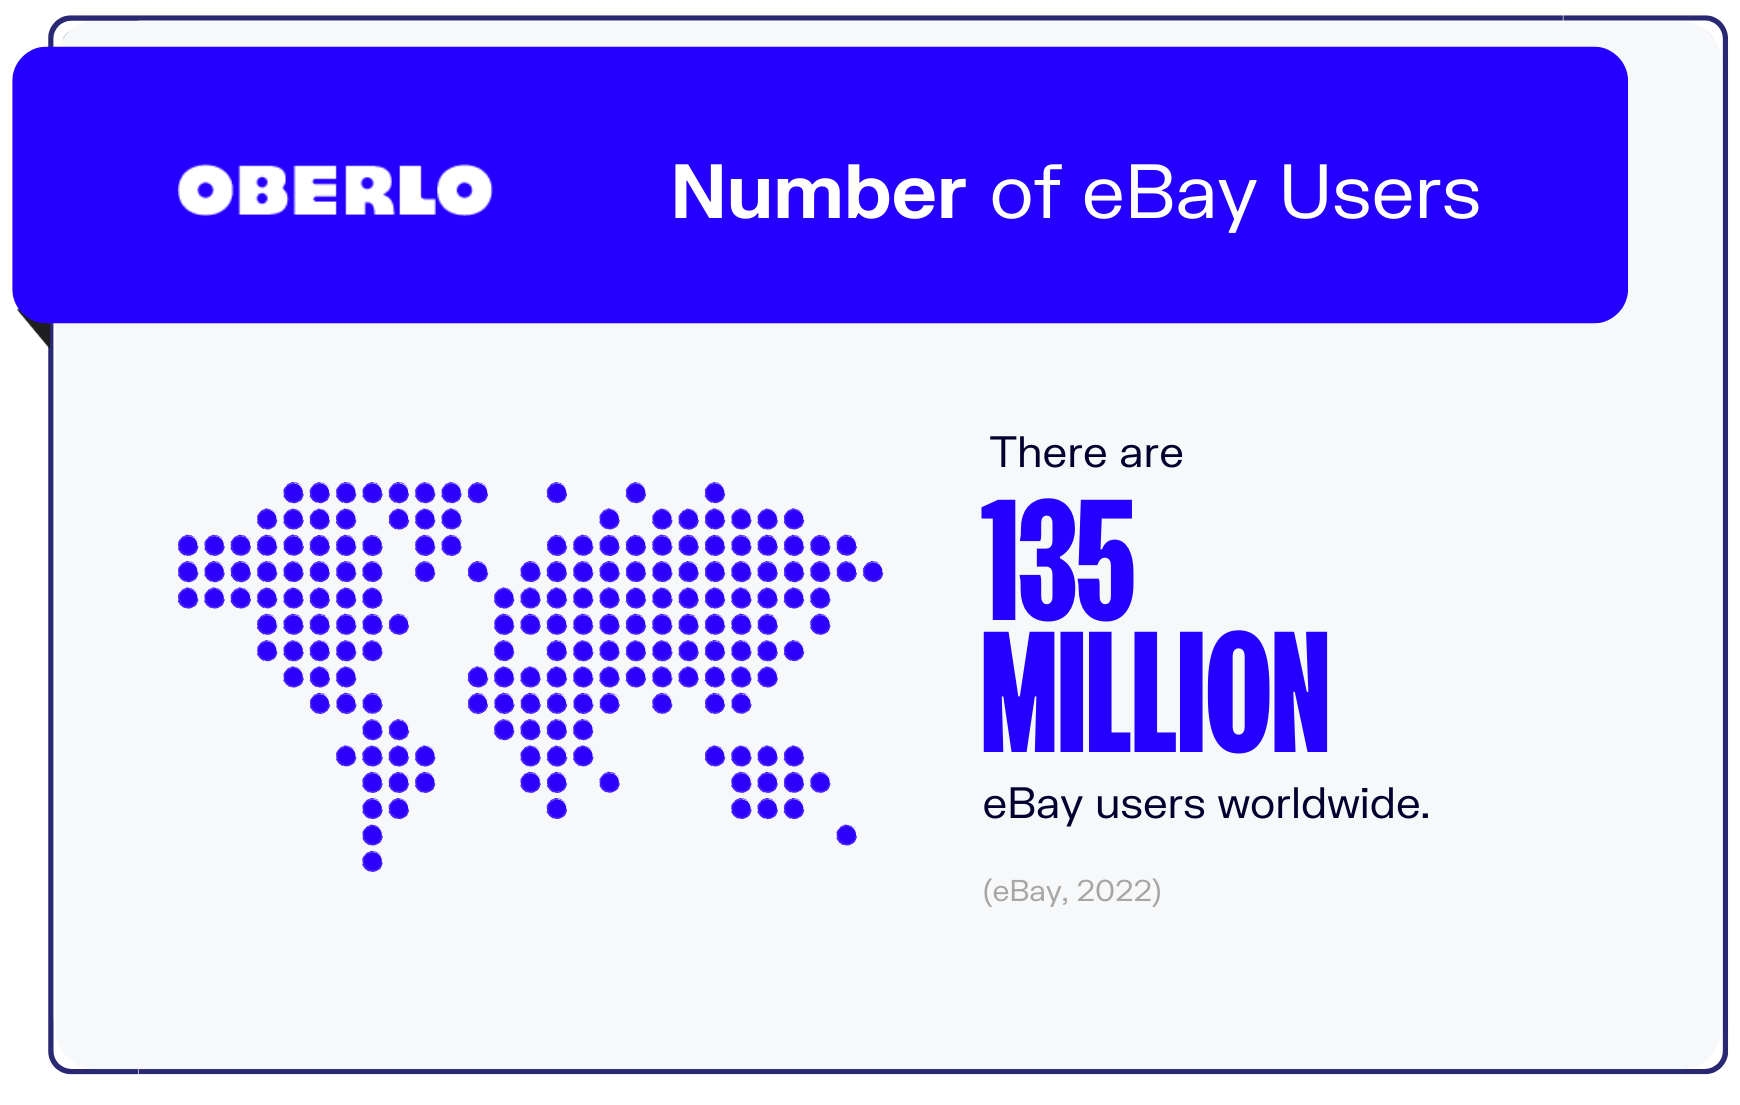 ebay statistics graphic1